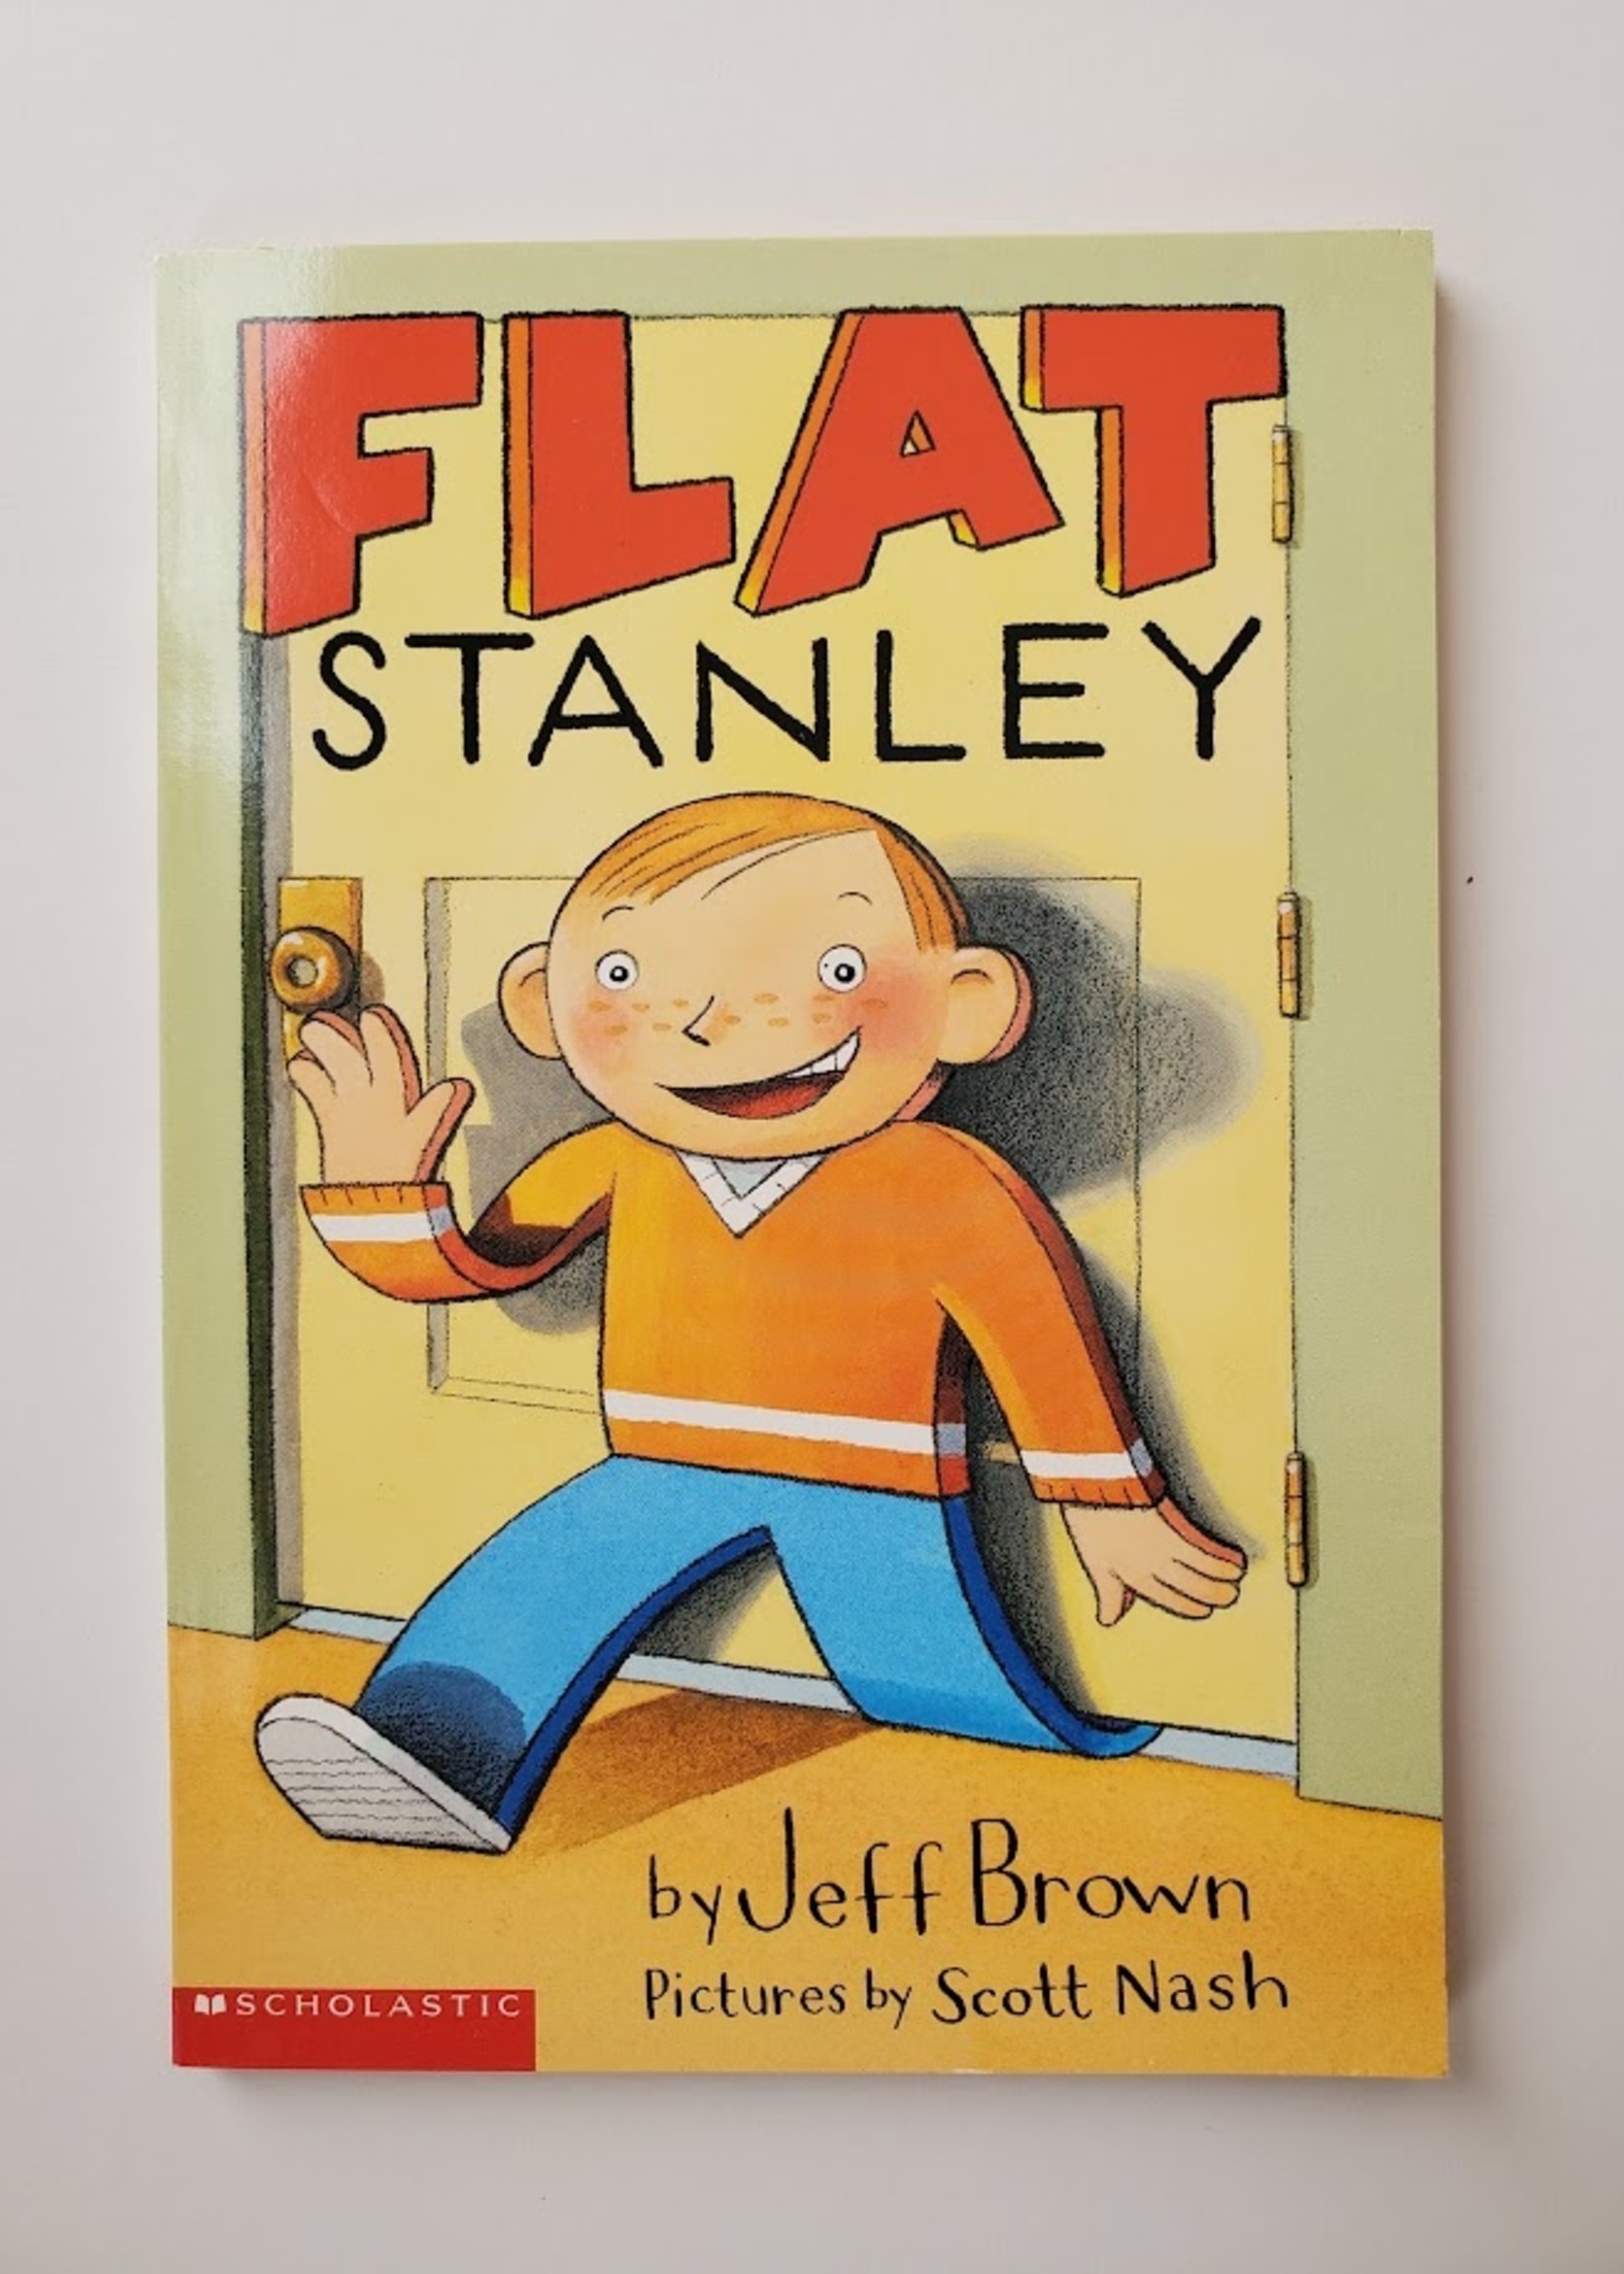 Flat Stanley